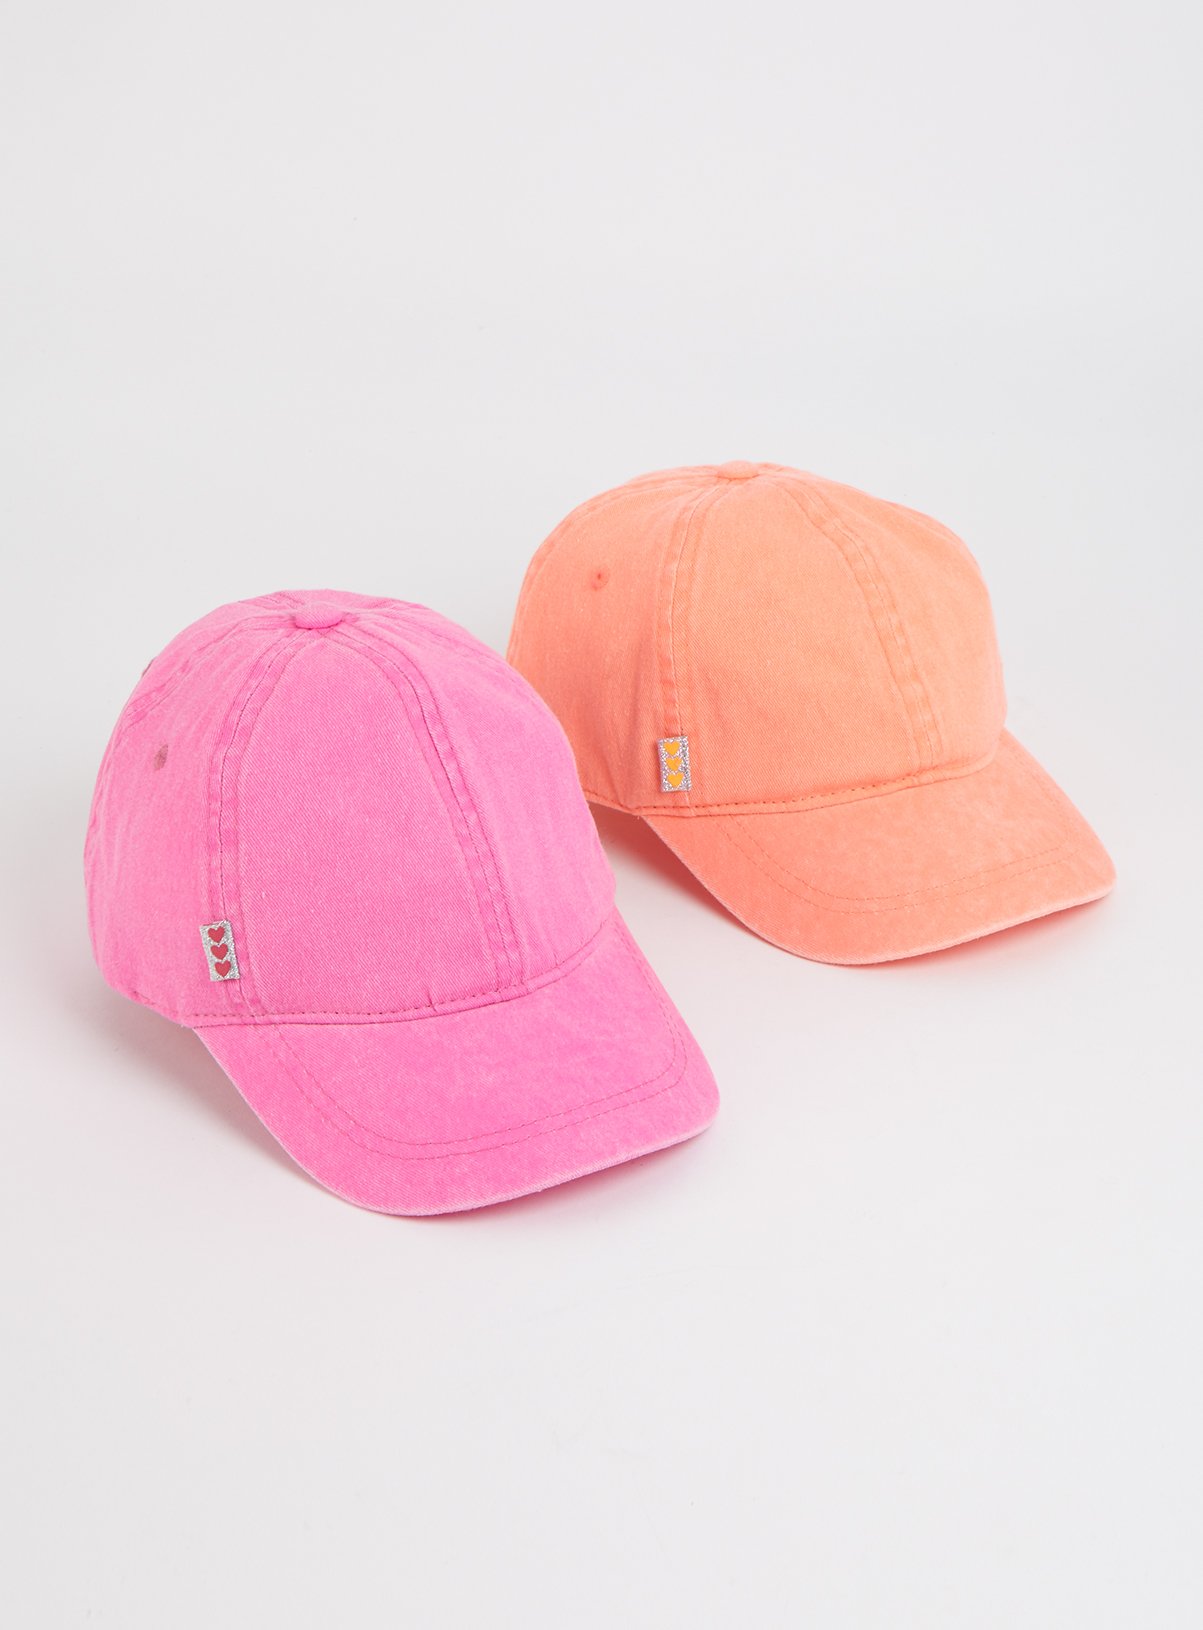 pink baseball cap